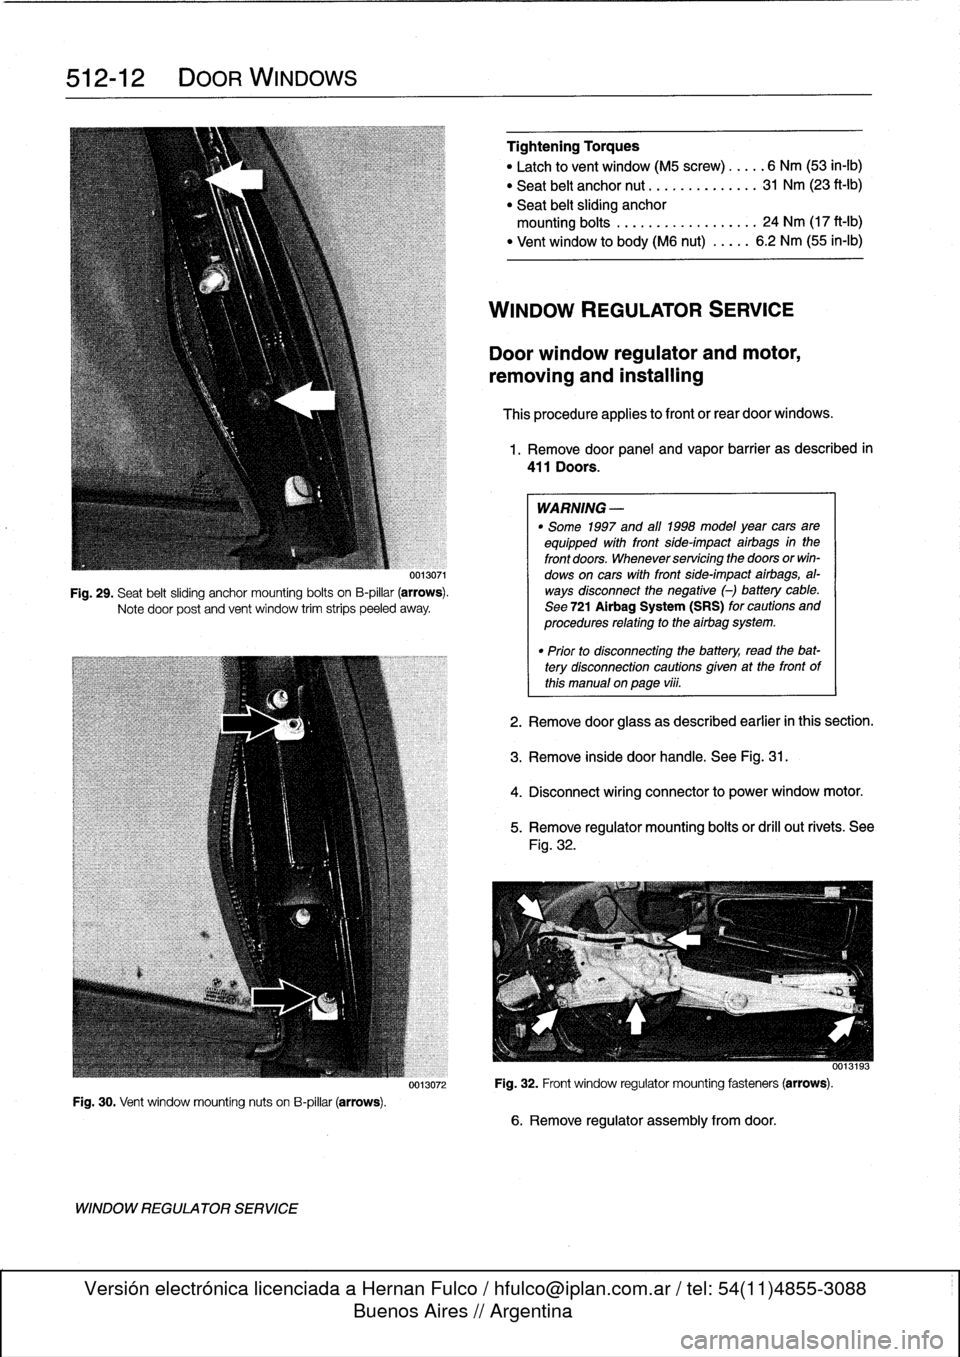 BMW M3 1998 E36 Owners Manual 
512-
1
2

	

DOOR
WINDOWS

Fig
.
30
.
Vent
window
mounting
nuts
on
B-pillar
(arrows)
.

WINDOW
REGULATOR
SERVICE

0013071

Fig
.
29
.
Seat
belt
sliding
anchor
mounting
bolts
on
B-pillar
(arrows)
.

N